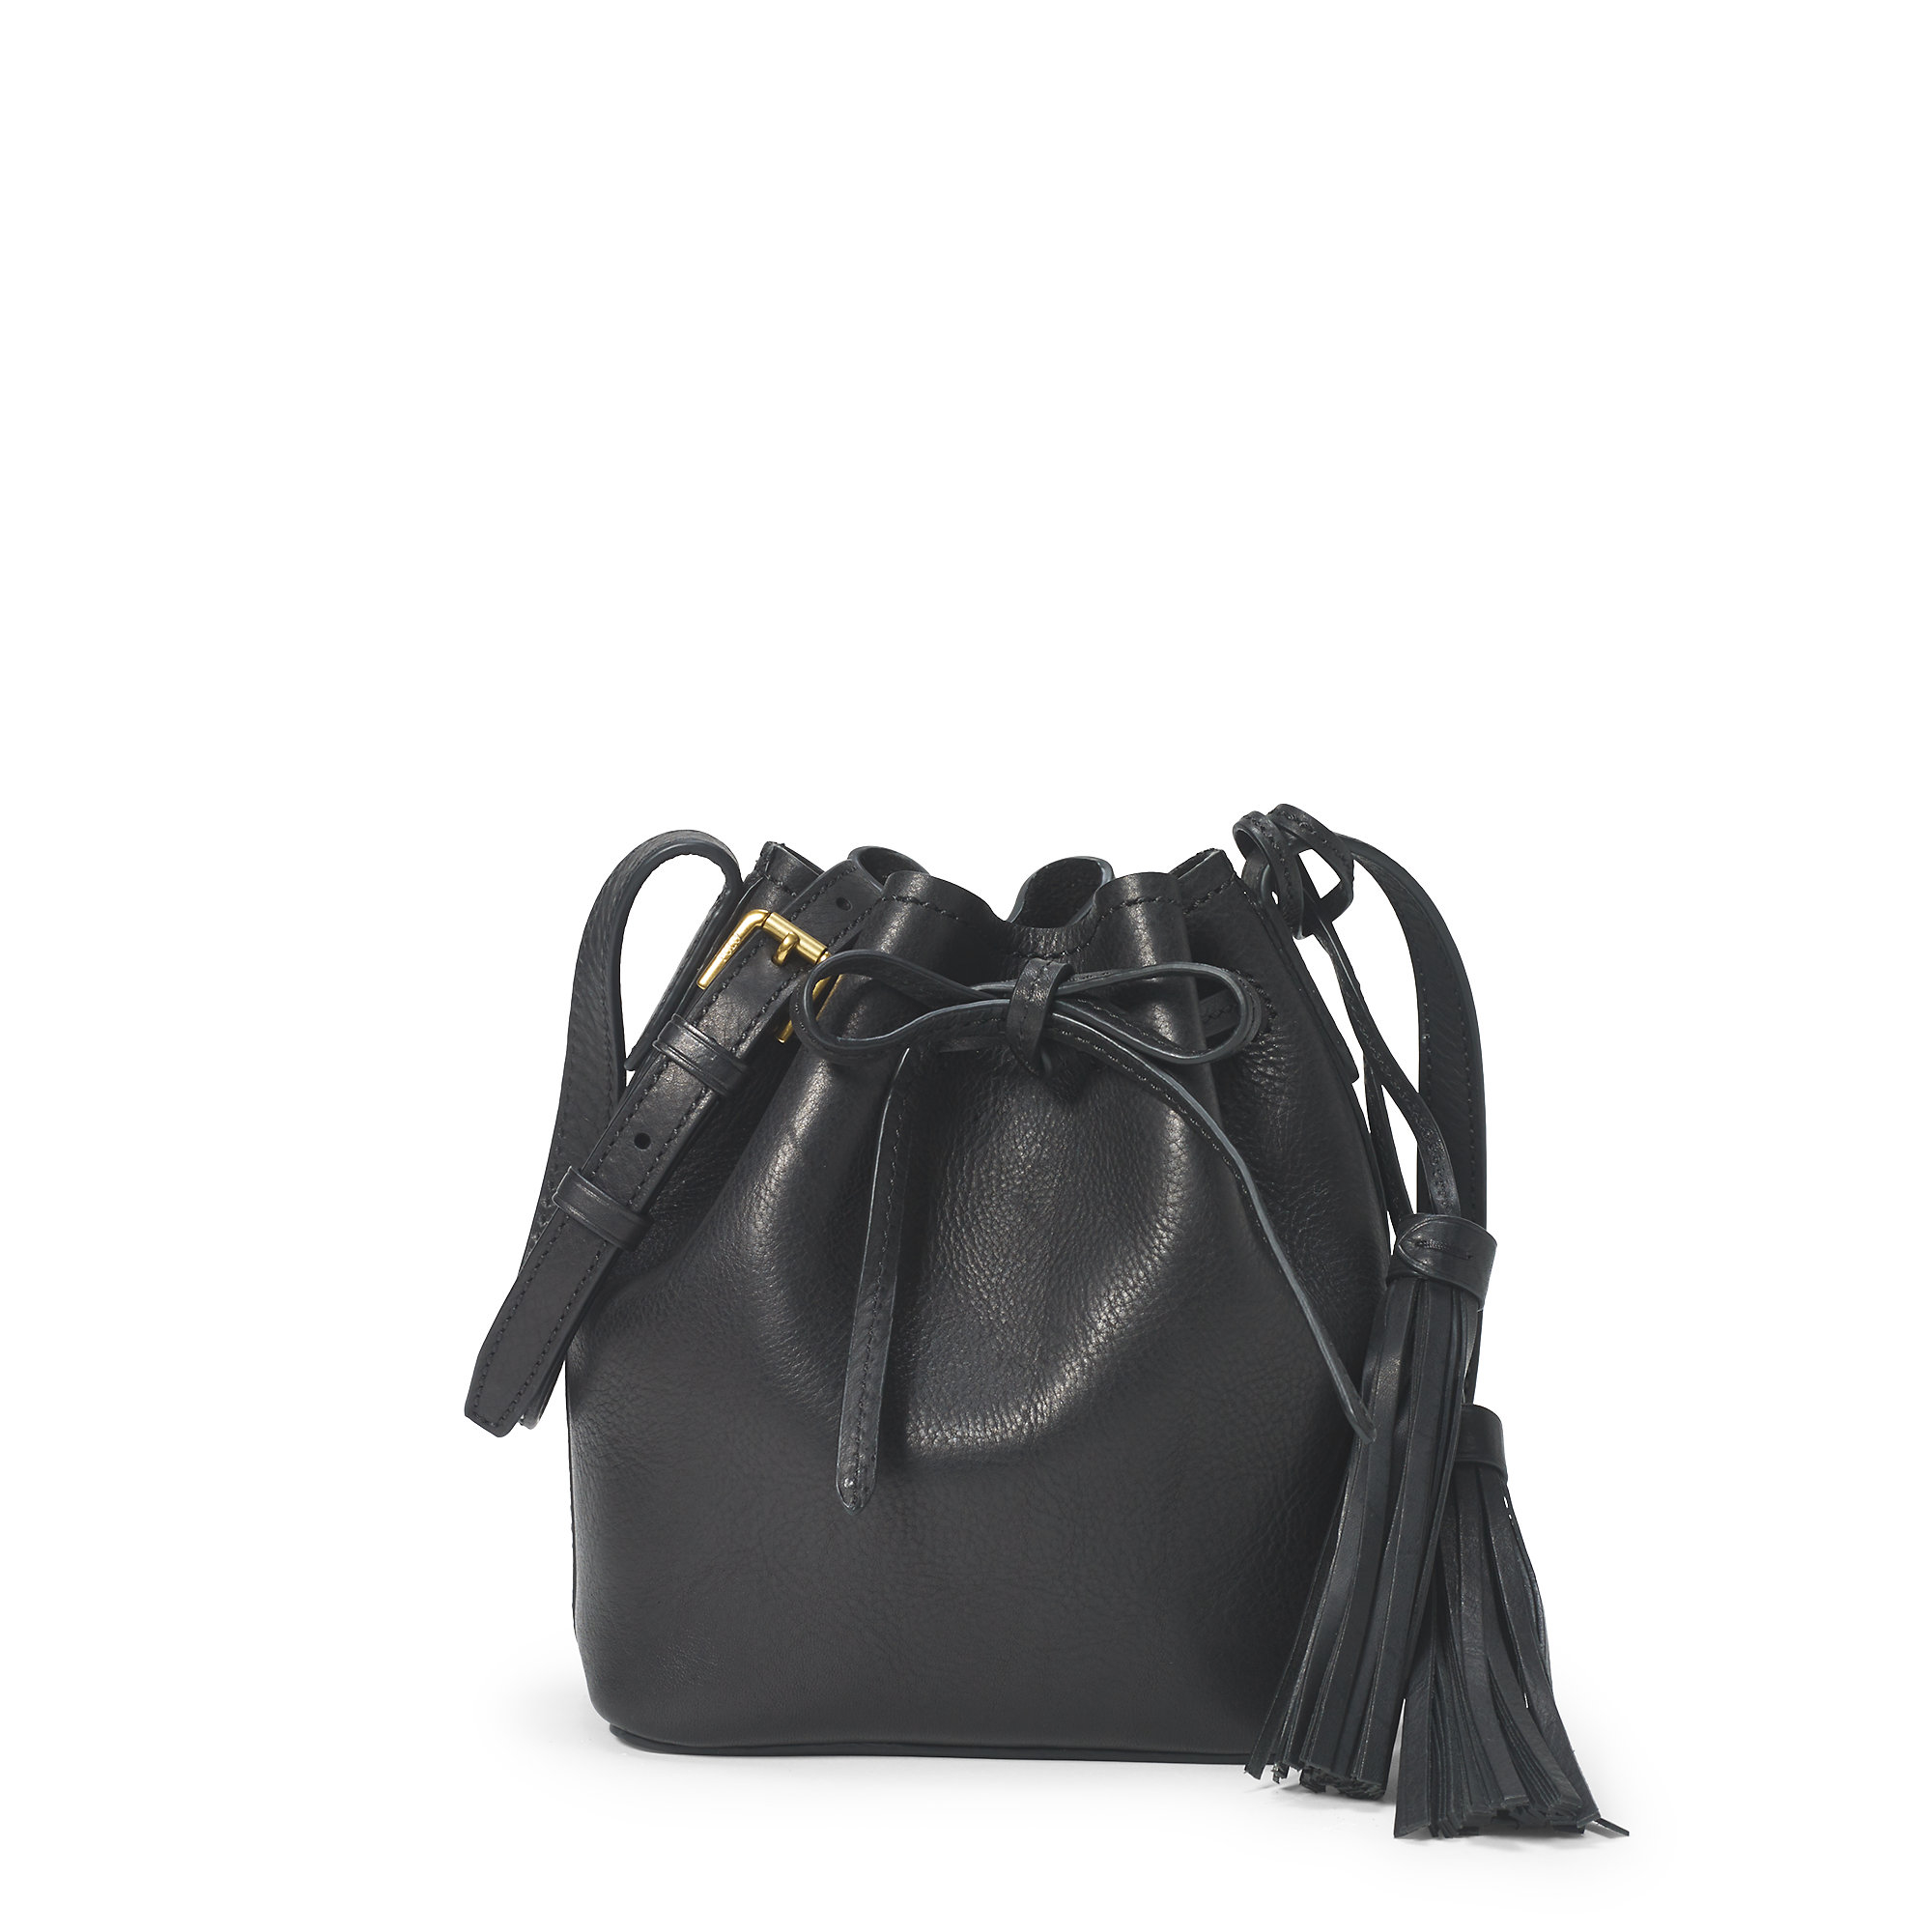 Polo ralph lauren Mini Leather Bucket Bag in Black